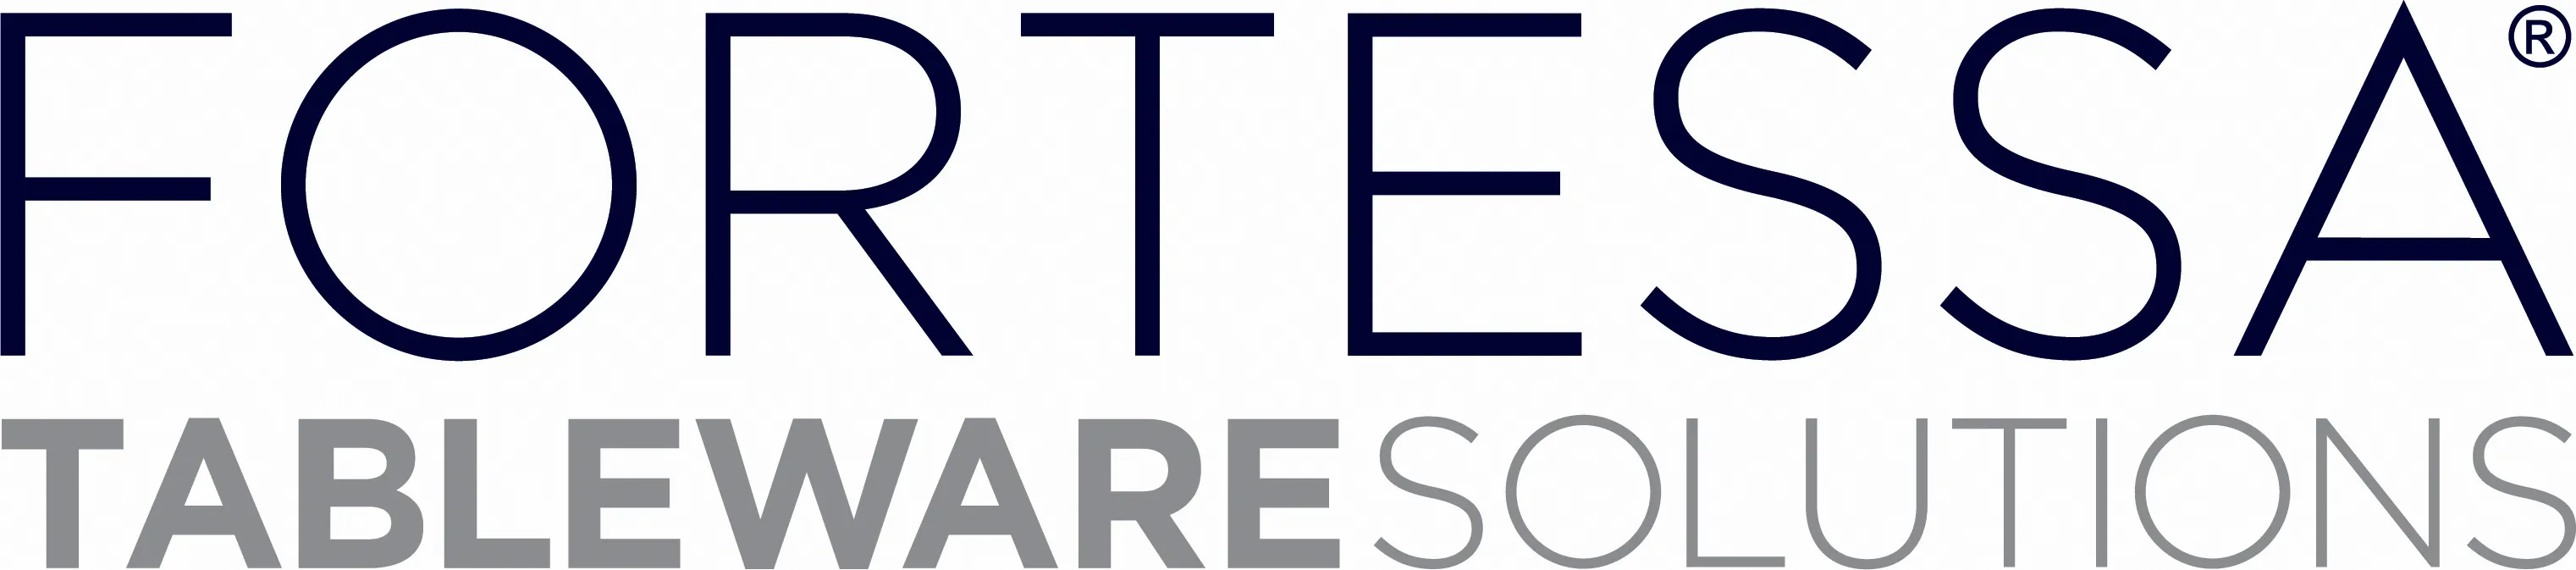 Fortessa Tableware Solutions Logo